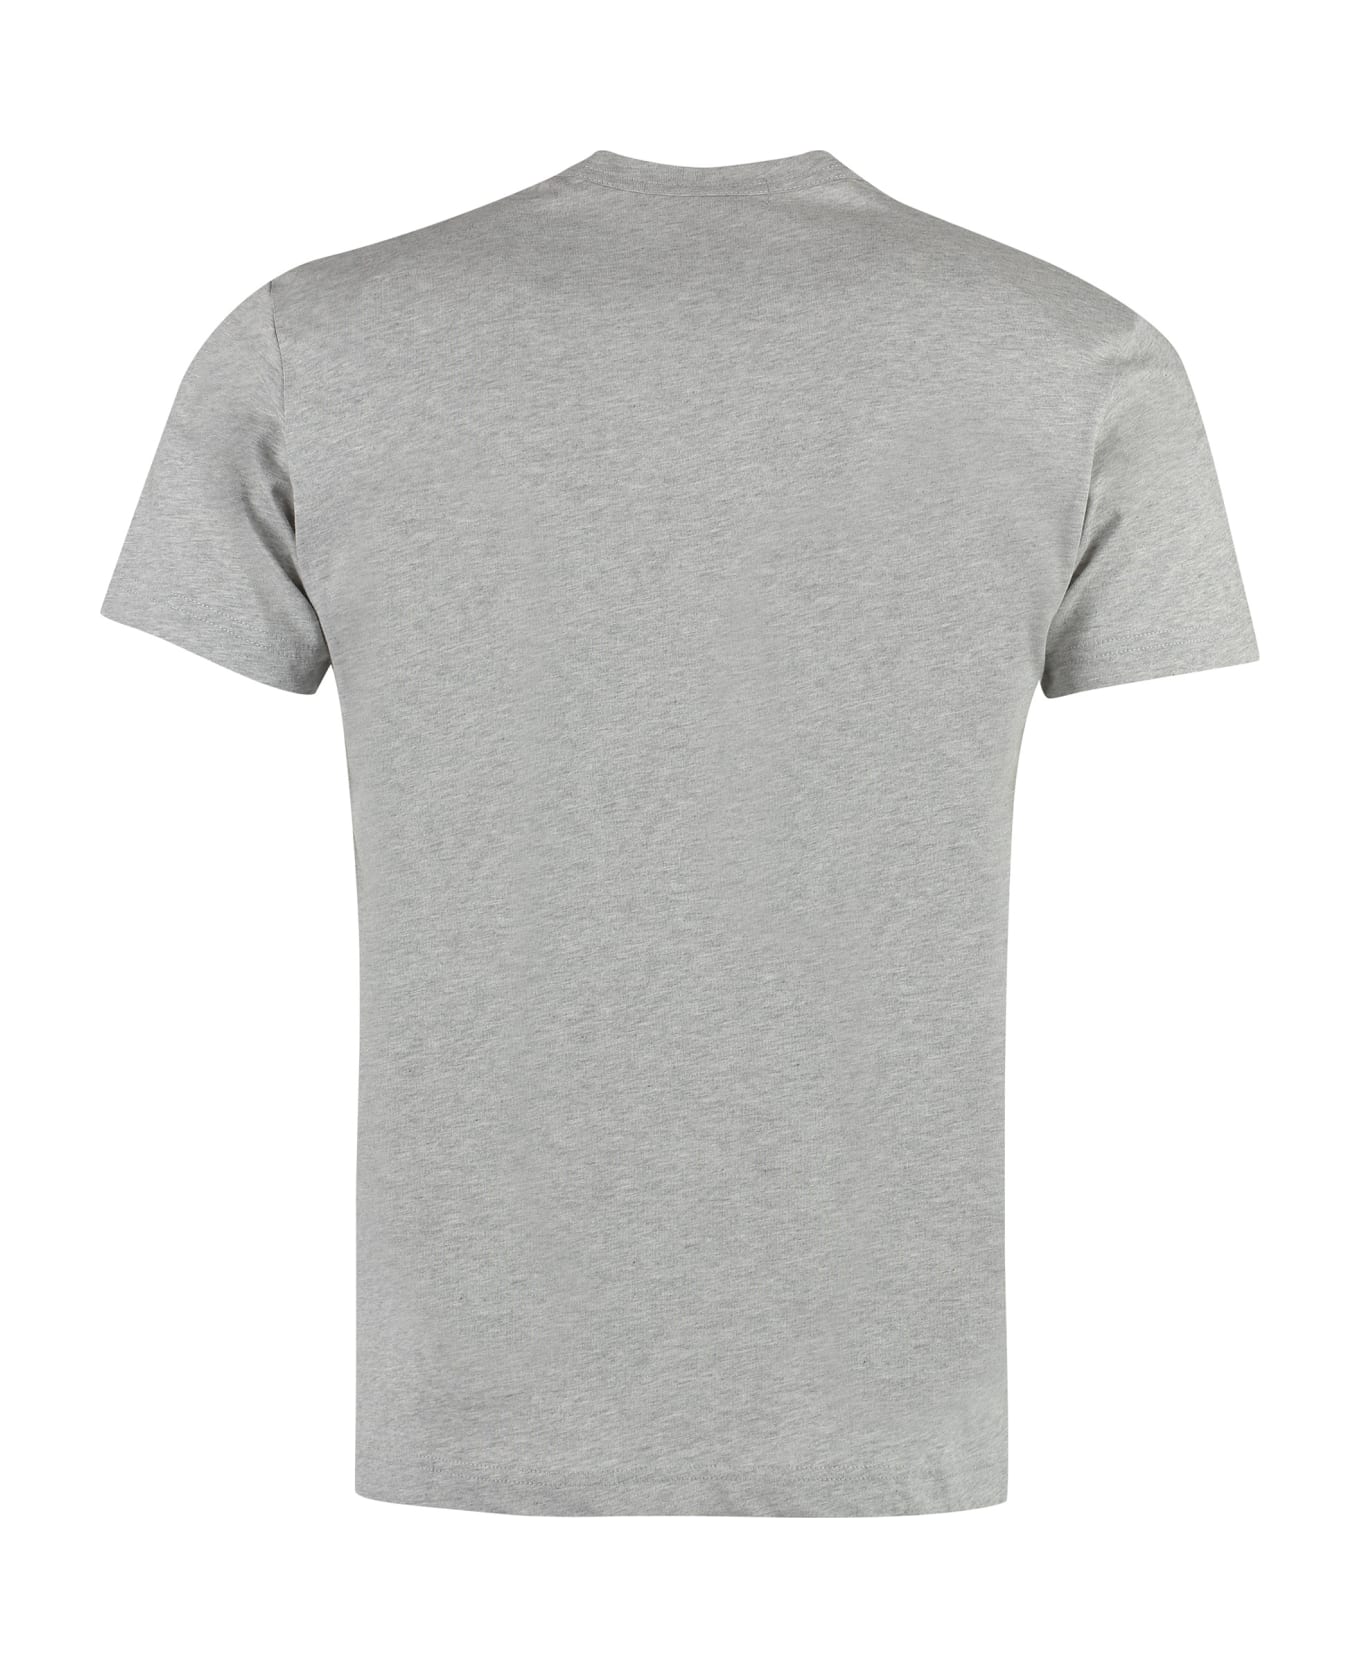 Comme des Garçons Shirt Printed Cotton T-shirt - grey